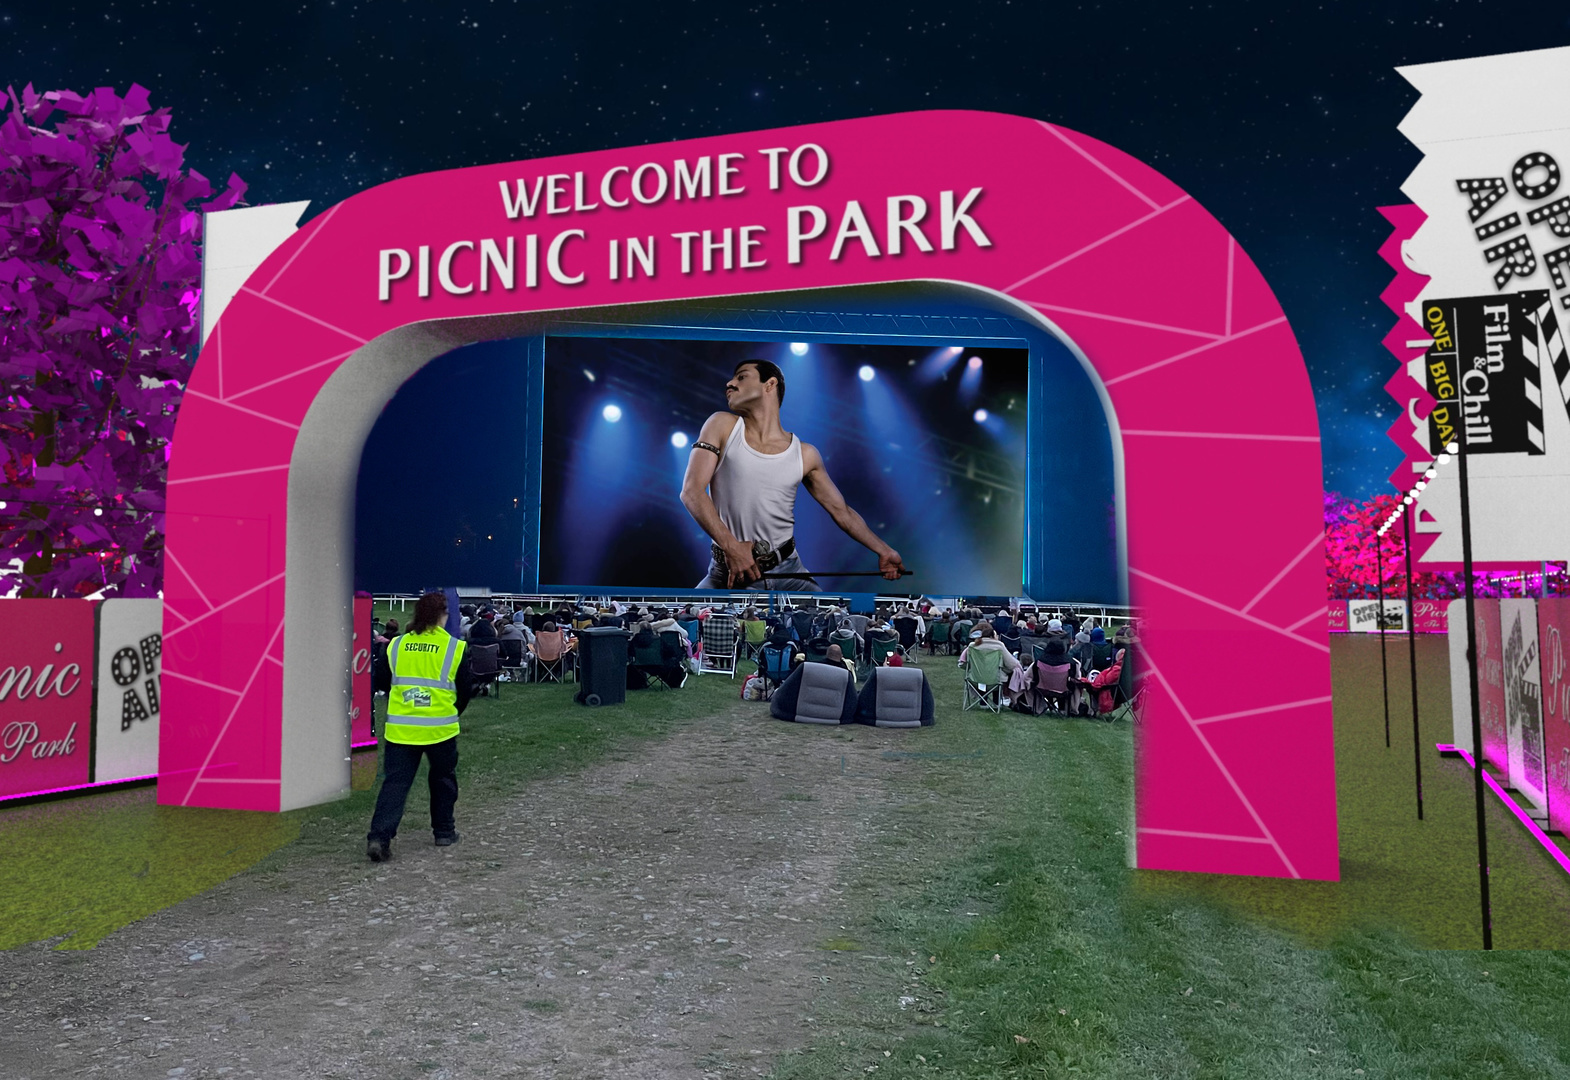 Picnic in the Park Film Festival Norwich - Bohemian Rhapsody Screening, Norwich, England, United Kingdom